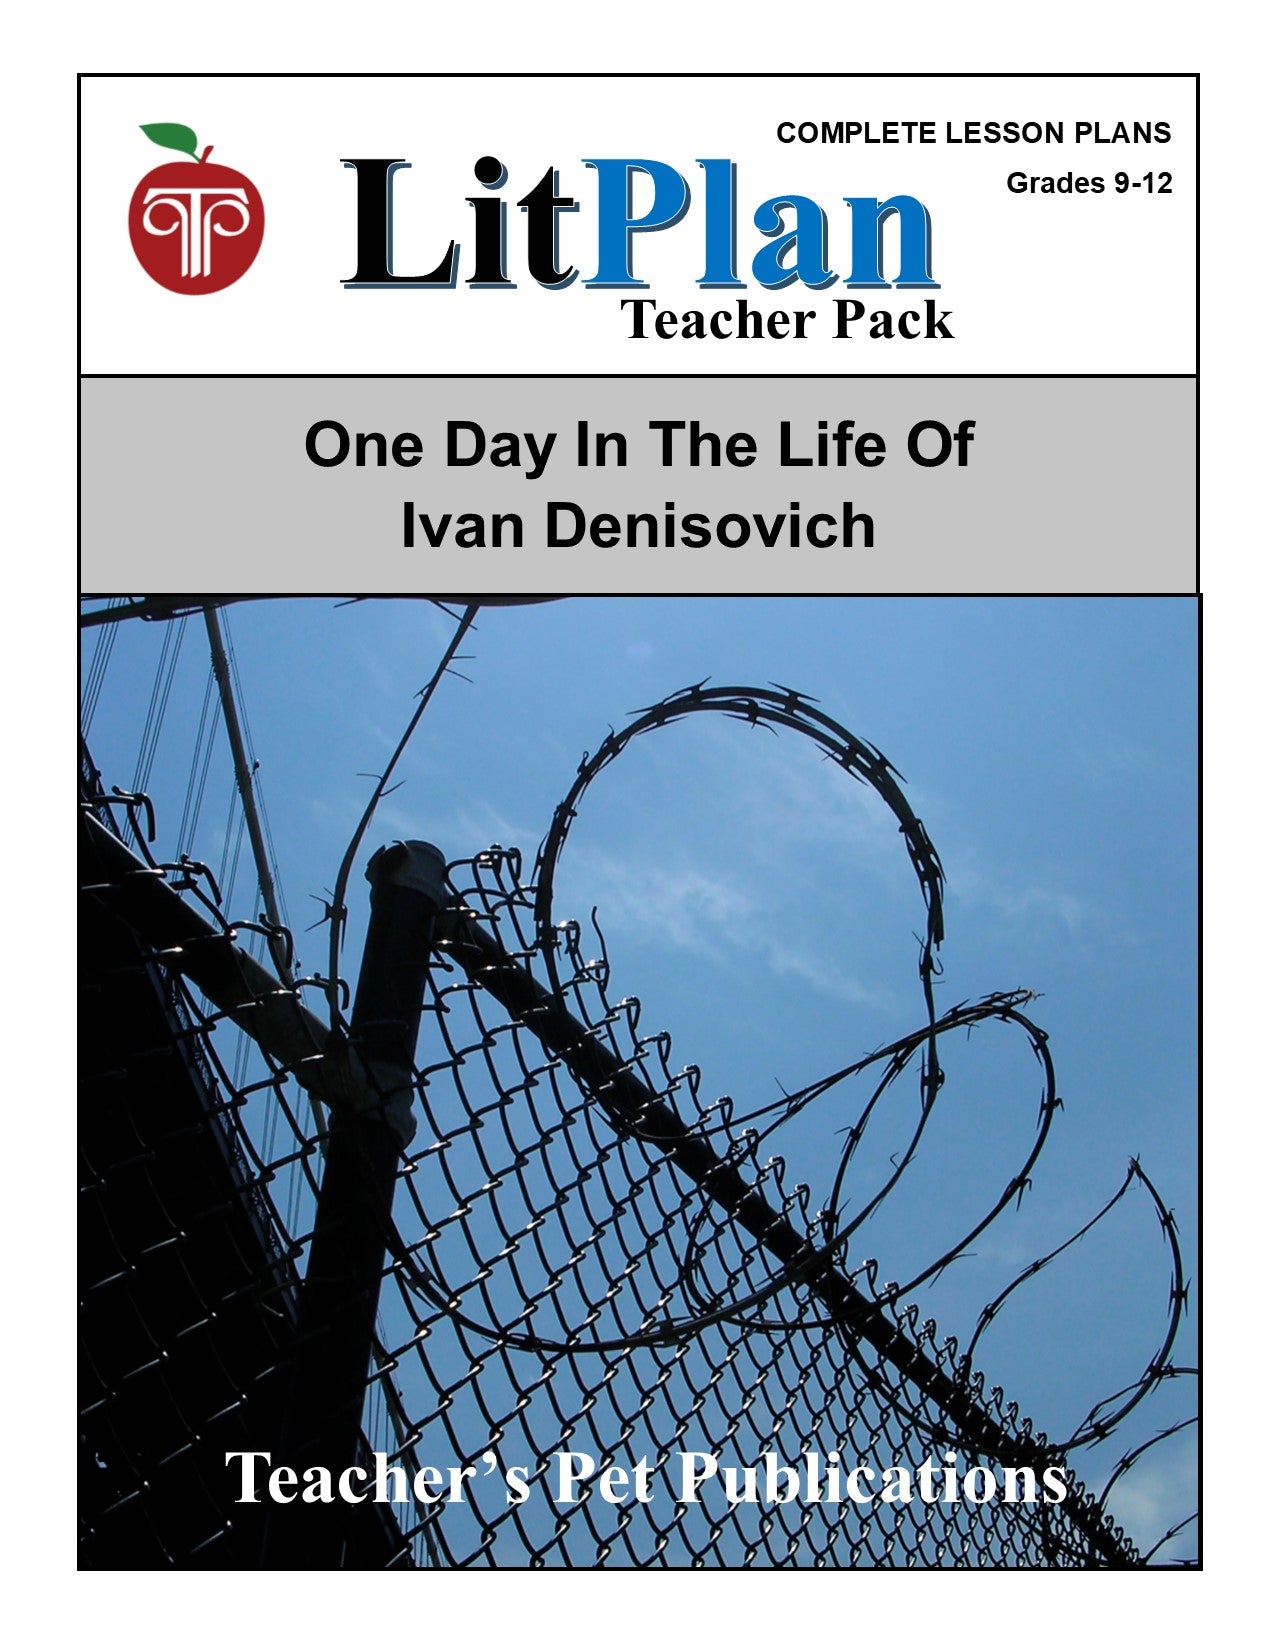 One Day in the Life of Ivan Denisovich: LitPlan Teacher Pack Grades 9-12